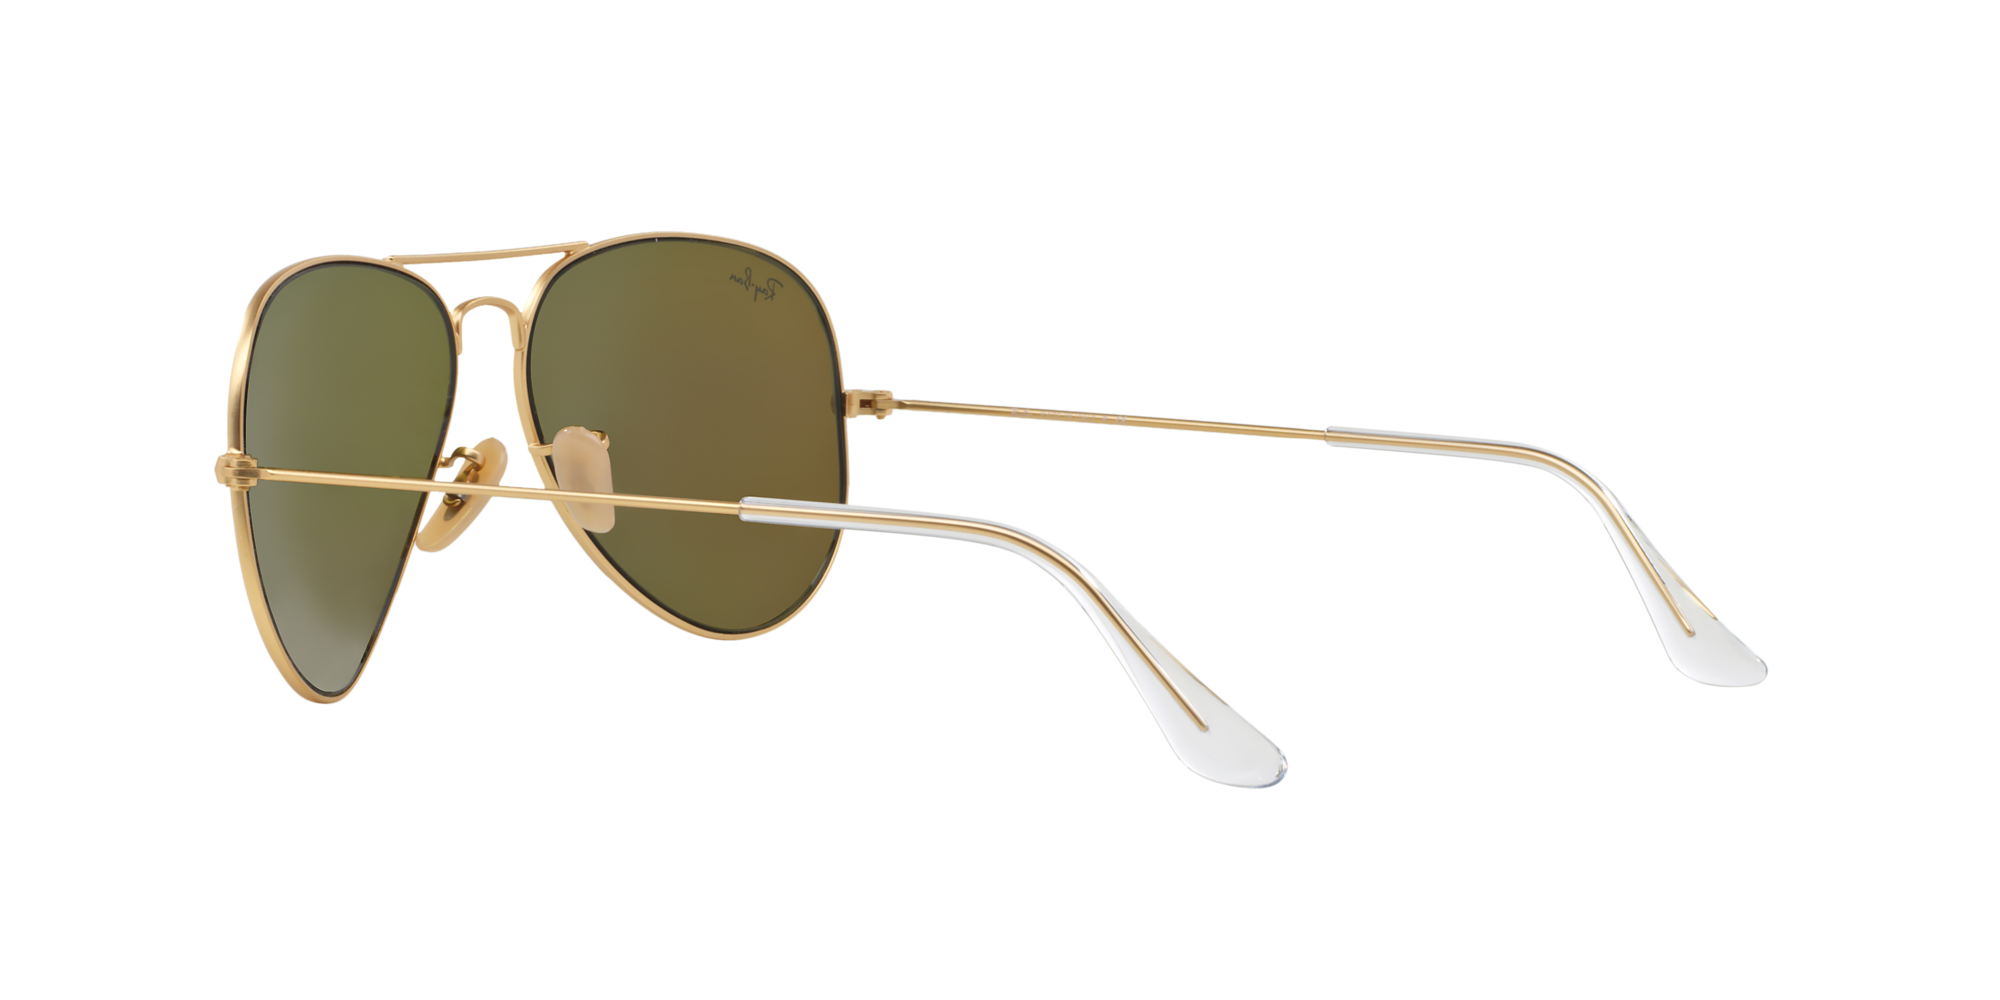 Ray-Ban RB3025 Classic Aviator Sunglasses, 58MM - image 2 of 13